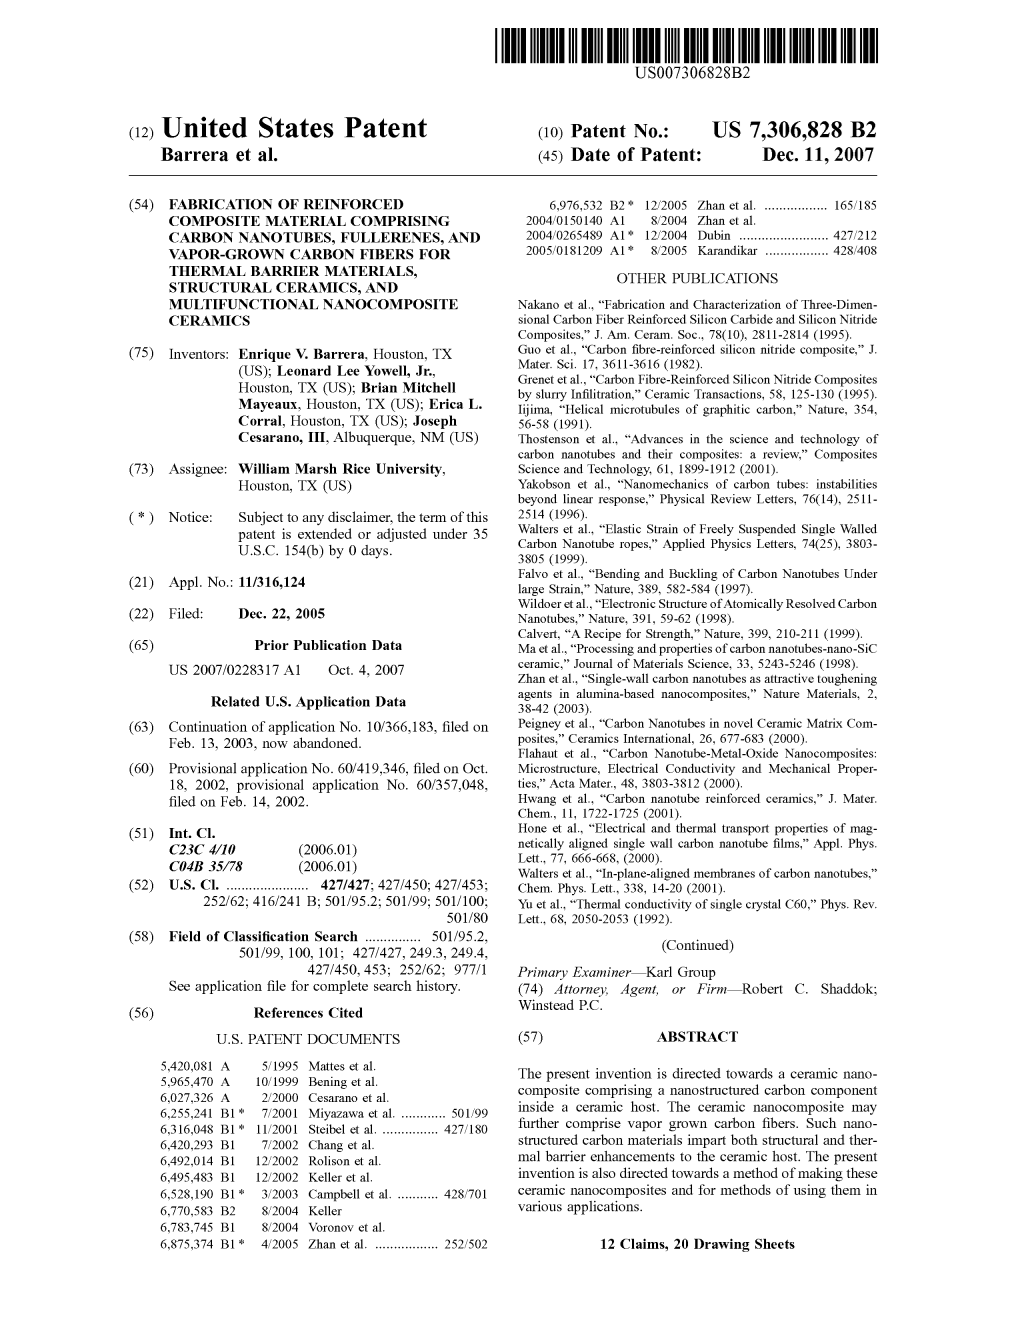 C12) United States Patent (10) Patent No.: US 7,306,828 B2 Barrera Et Al